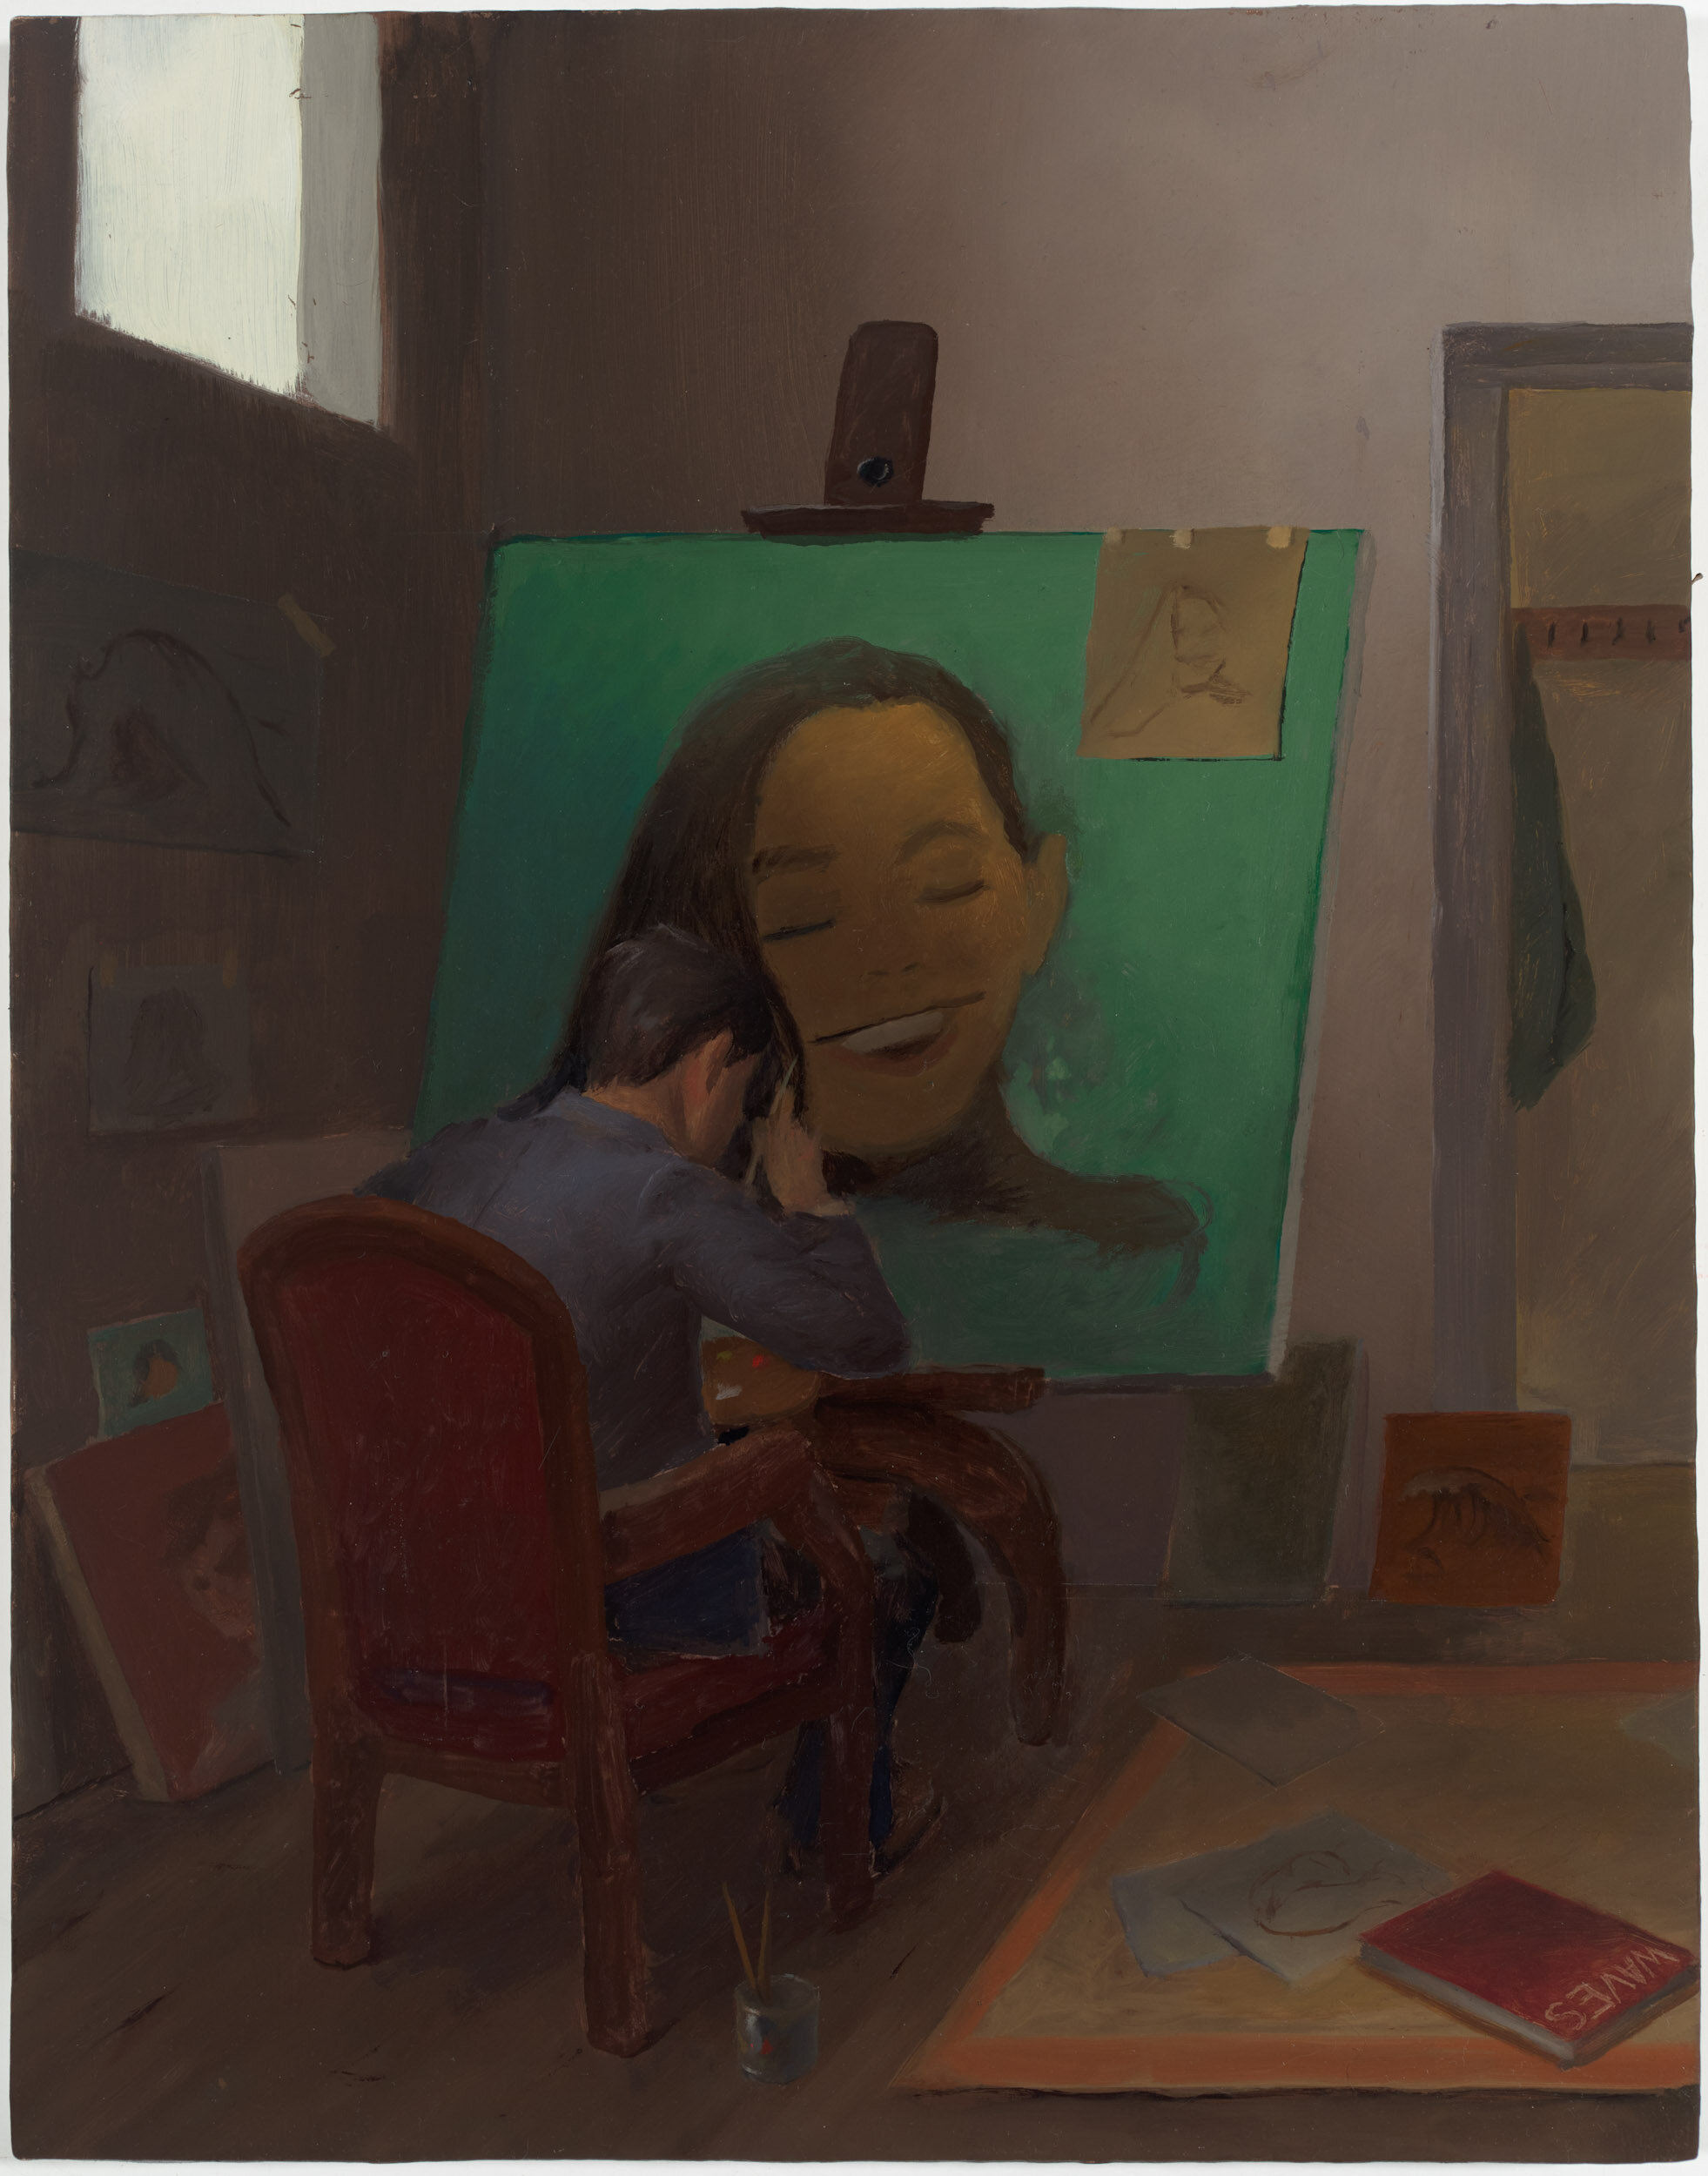  Self Portrait as a Painter   14” x 11”  Oil on Panel  2021 